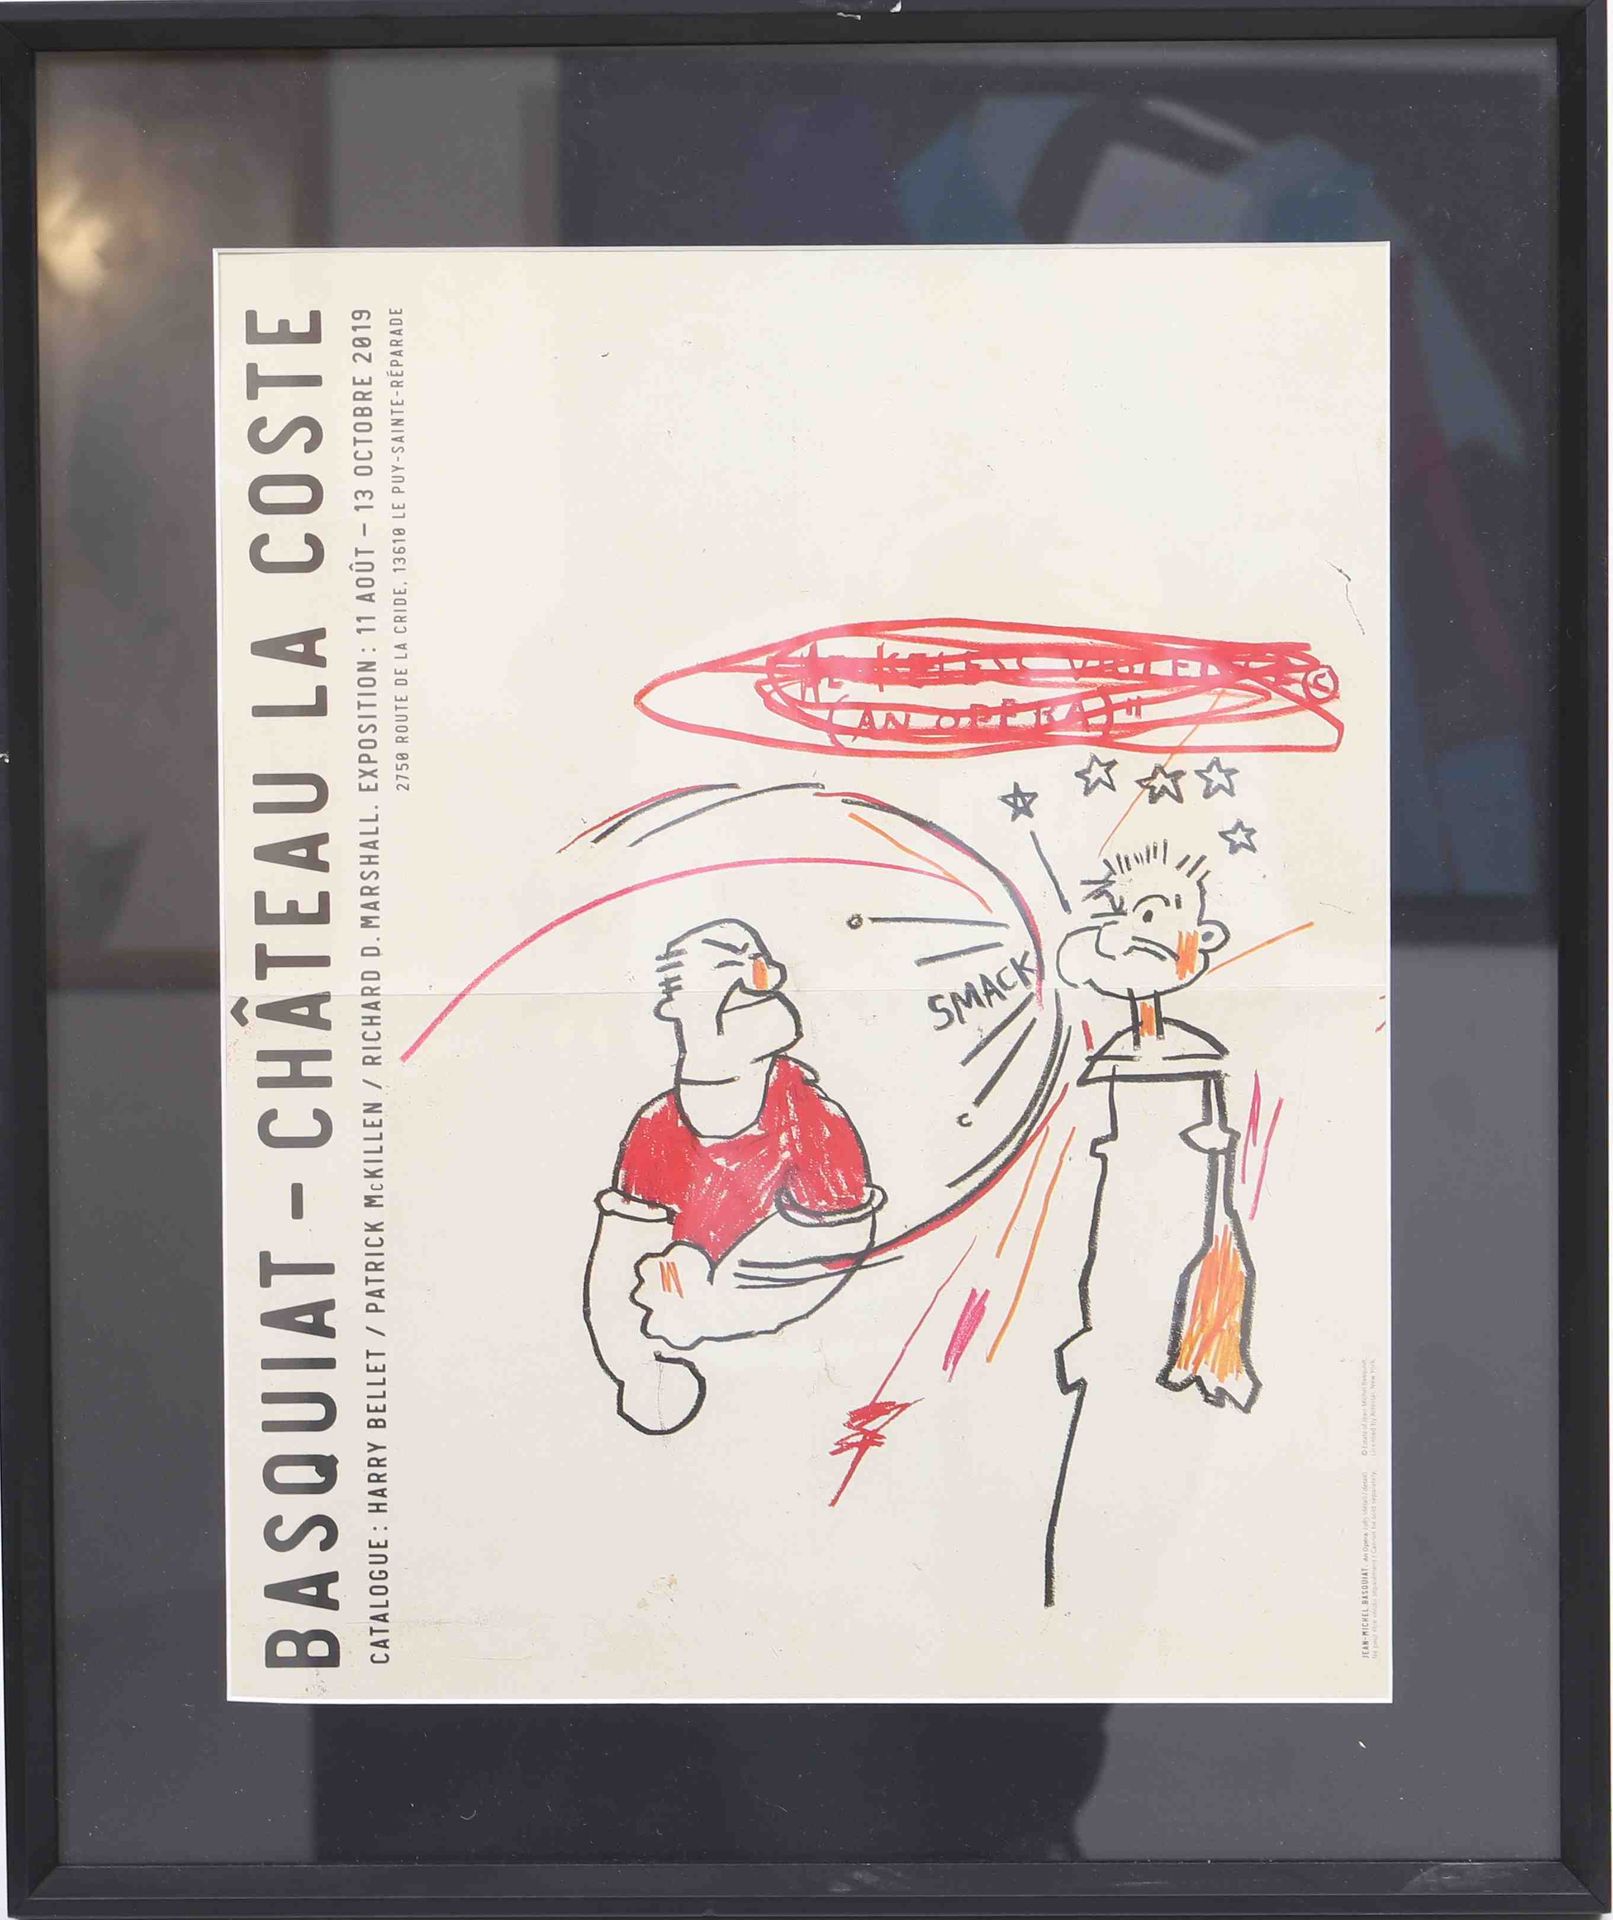 Null 让-米歇尔-巴斯奇亚（1960-1988）（后）
2019年8月11日至10月13日在拉科斯特城堡举办的展览的原始海报 
版本：让-米歇尔-巴斯奇亚的&hellip;